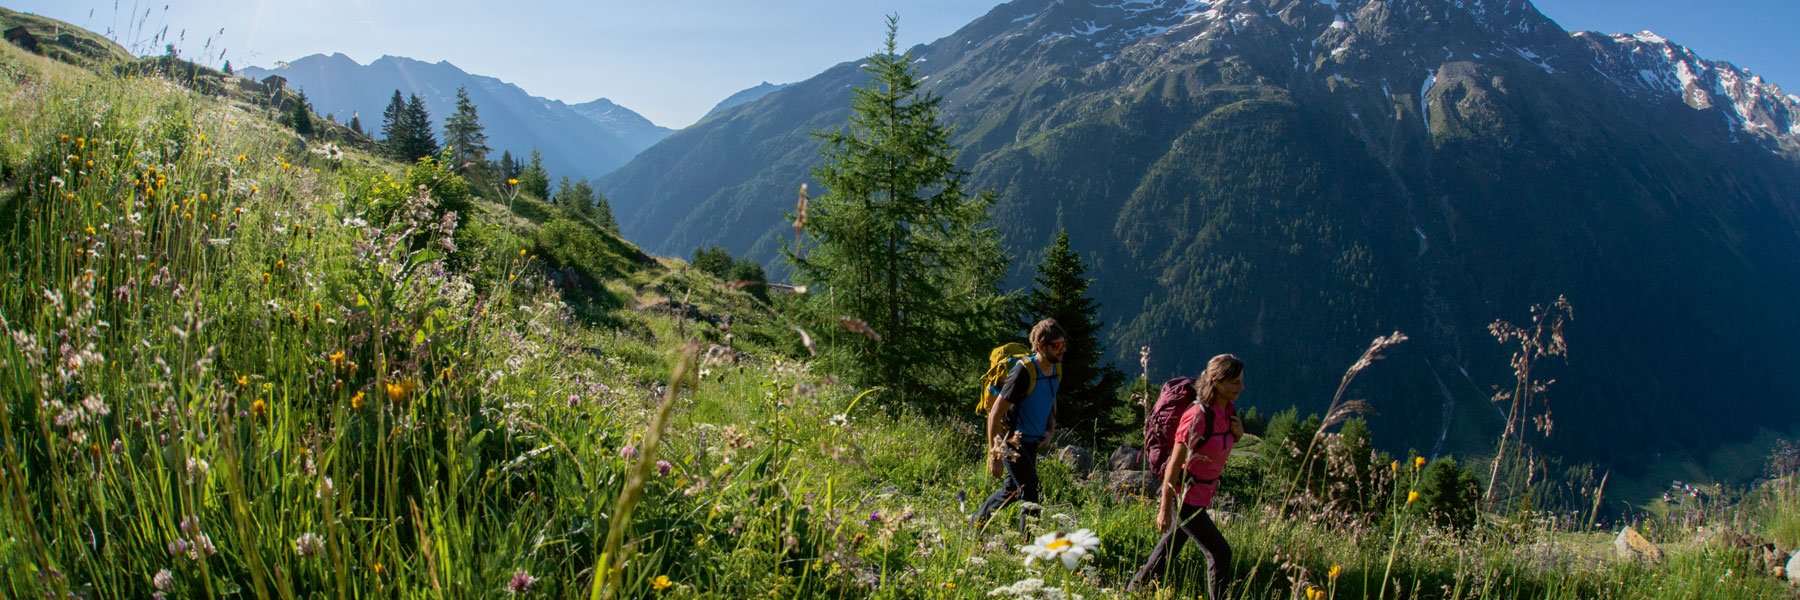 Wandern in den Ötztaler Alpen